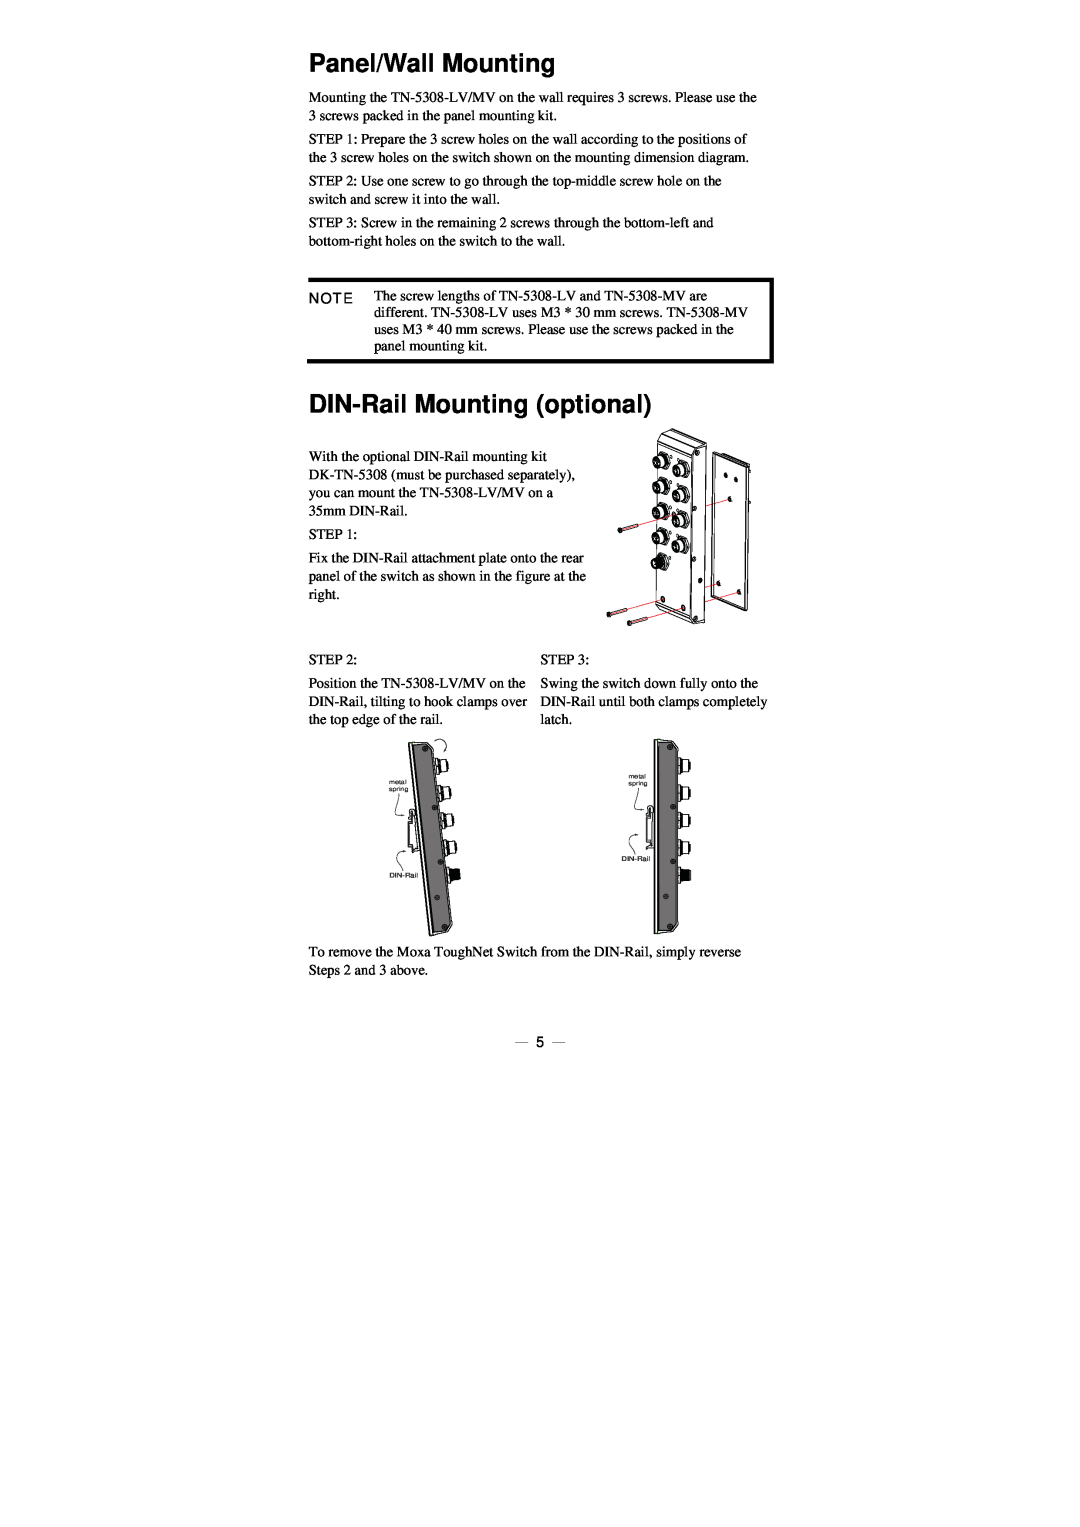 Moxa Technologies TN-5308 manual Panel/Wall Mounting, DIN-Rail Mounting optional 